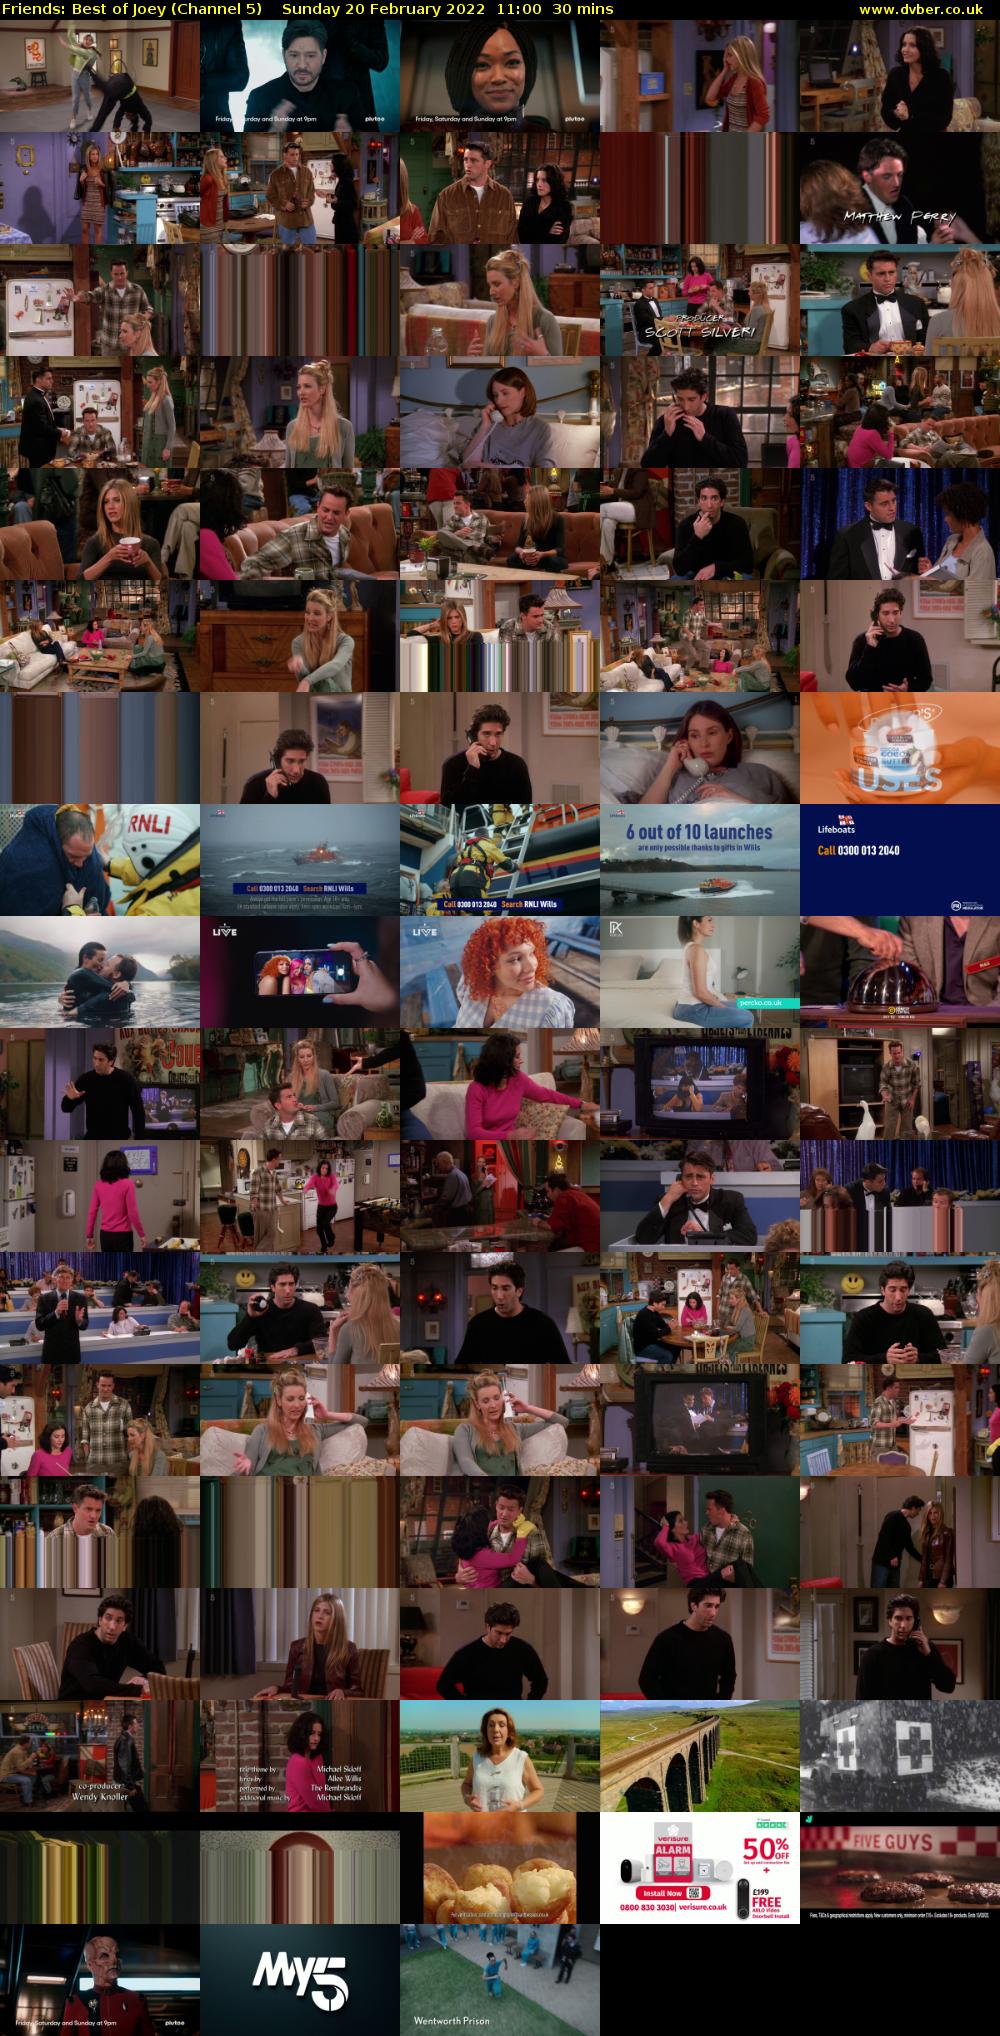 Friends: Best of Joey (Channel 5) Sunday 20 February 2022 11:00 - 11:30